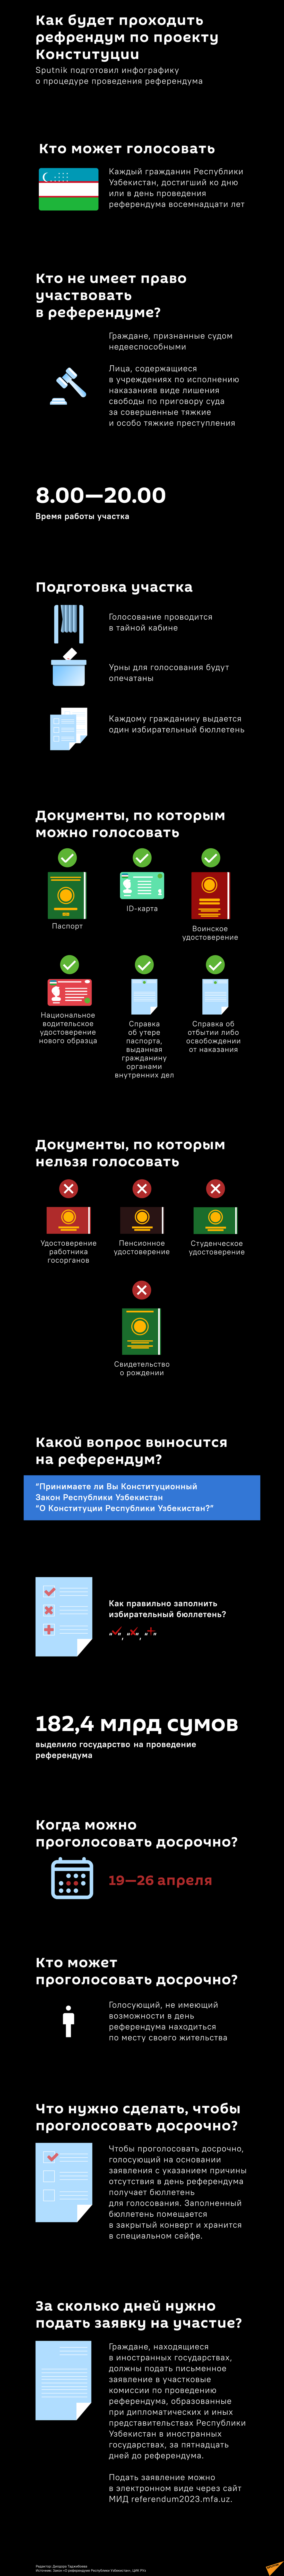 Референдум по проекту конституции инфографика - Sputnik Узбекистан